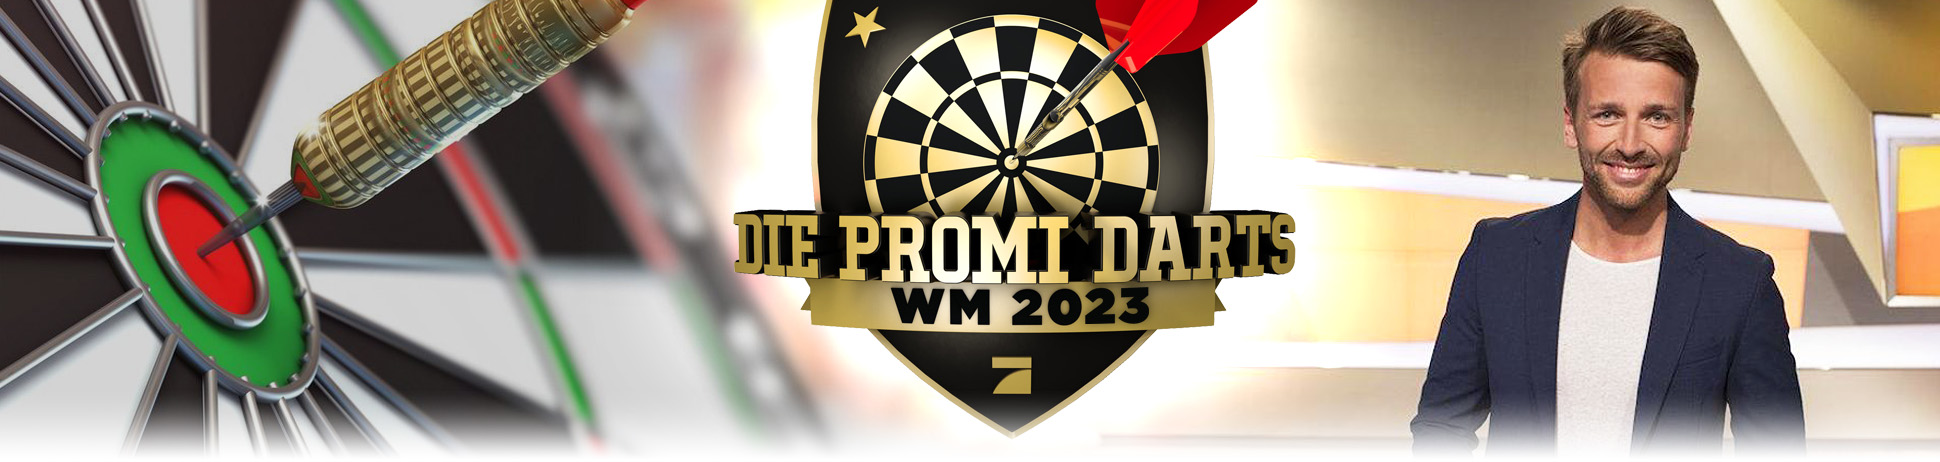 Die Promi-Darts-WM